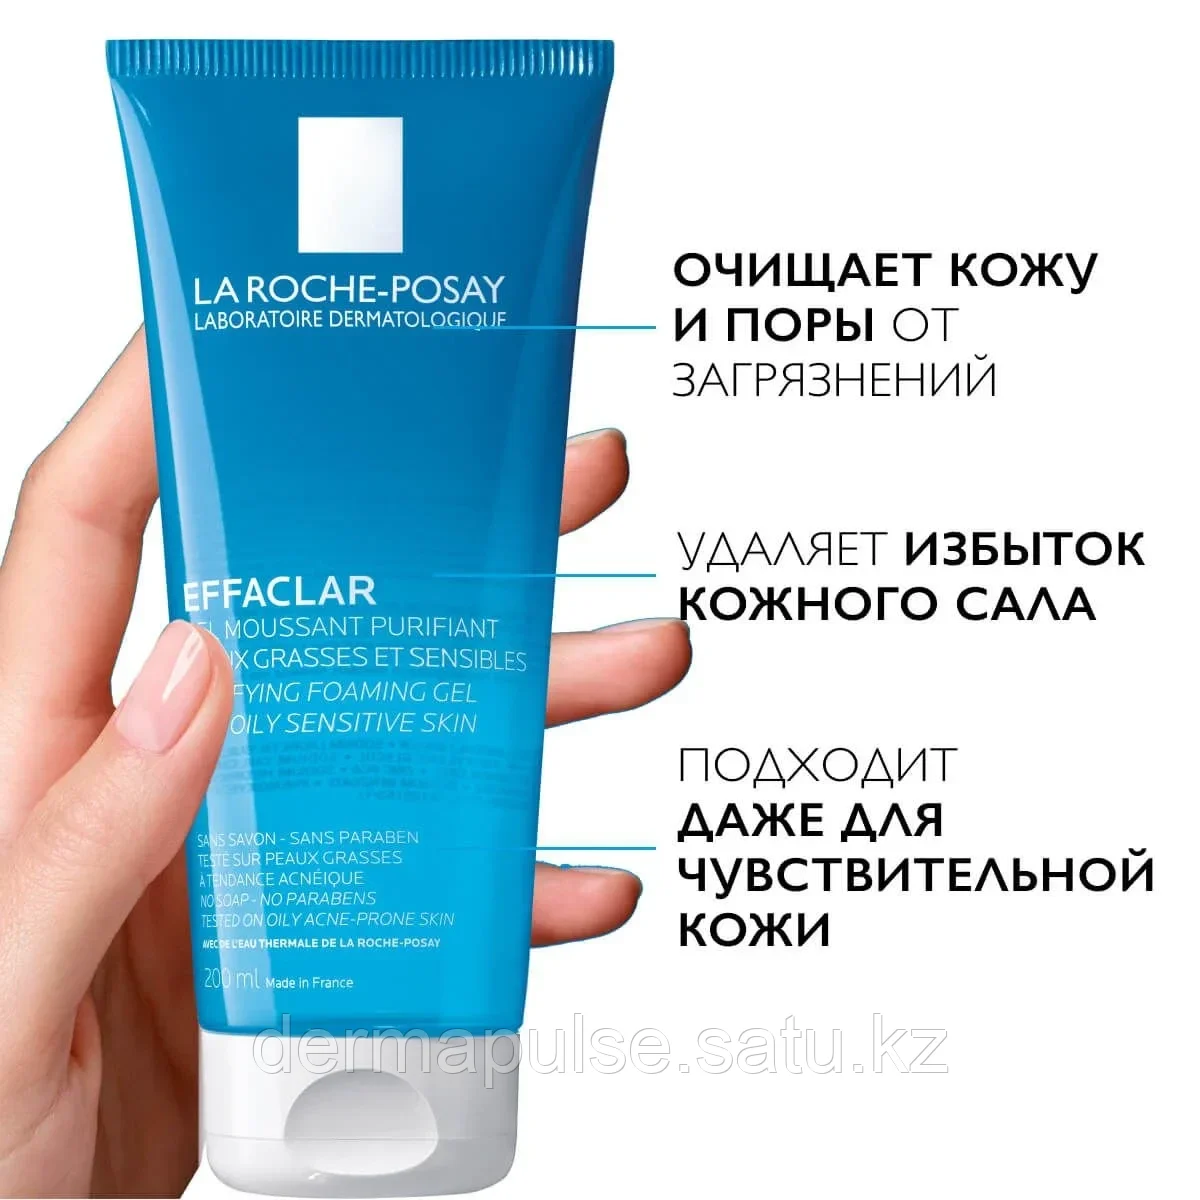 La Roche Posay EFFACLAR GEL Очищающий пенящийся гель для жирной кожи 200мл.